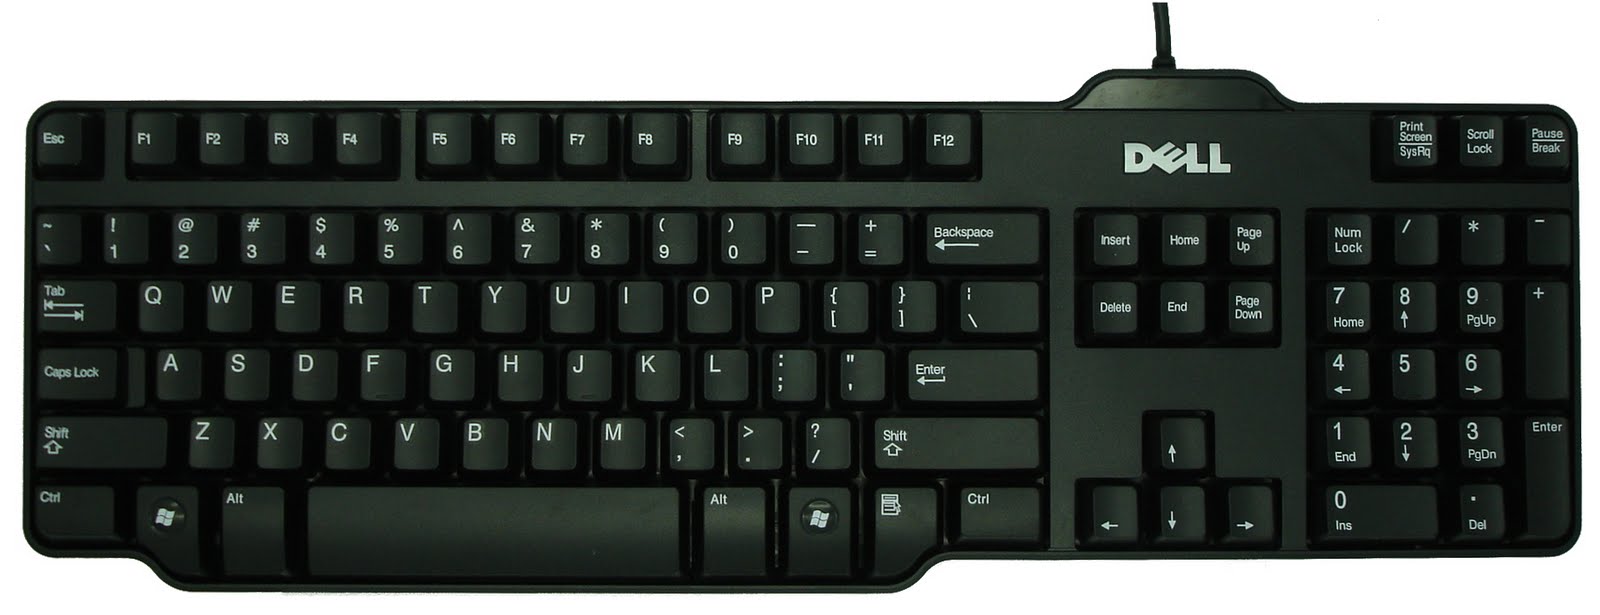 Computerhws Types Of Computer Keyboards